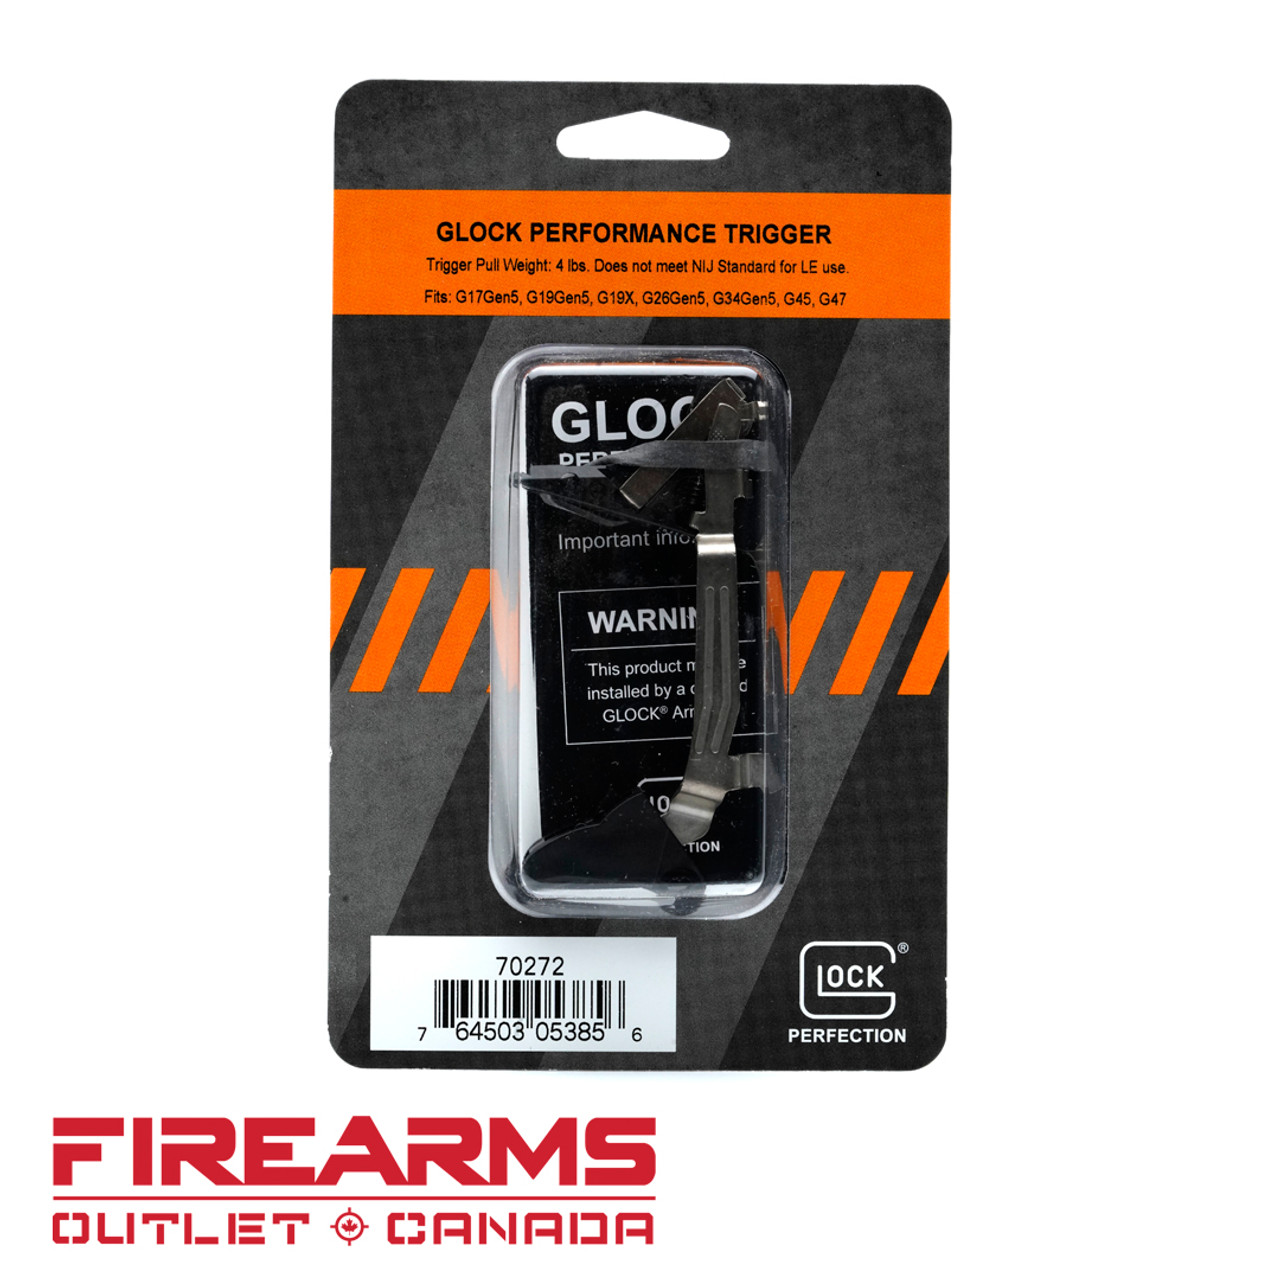 Glock Gen 5 Performance Trigger - G17, G19, G19X, G34, Etc... [70272]